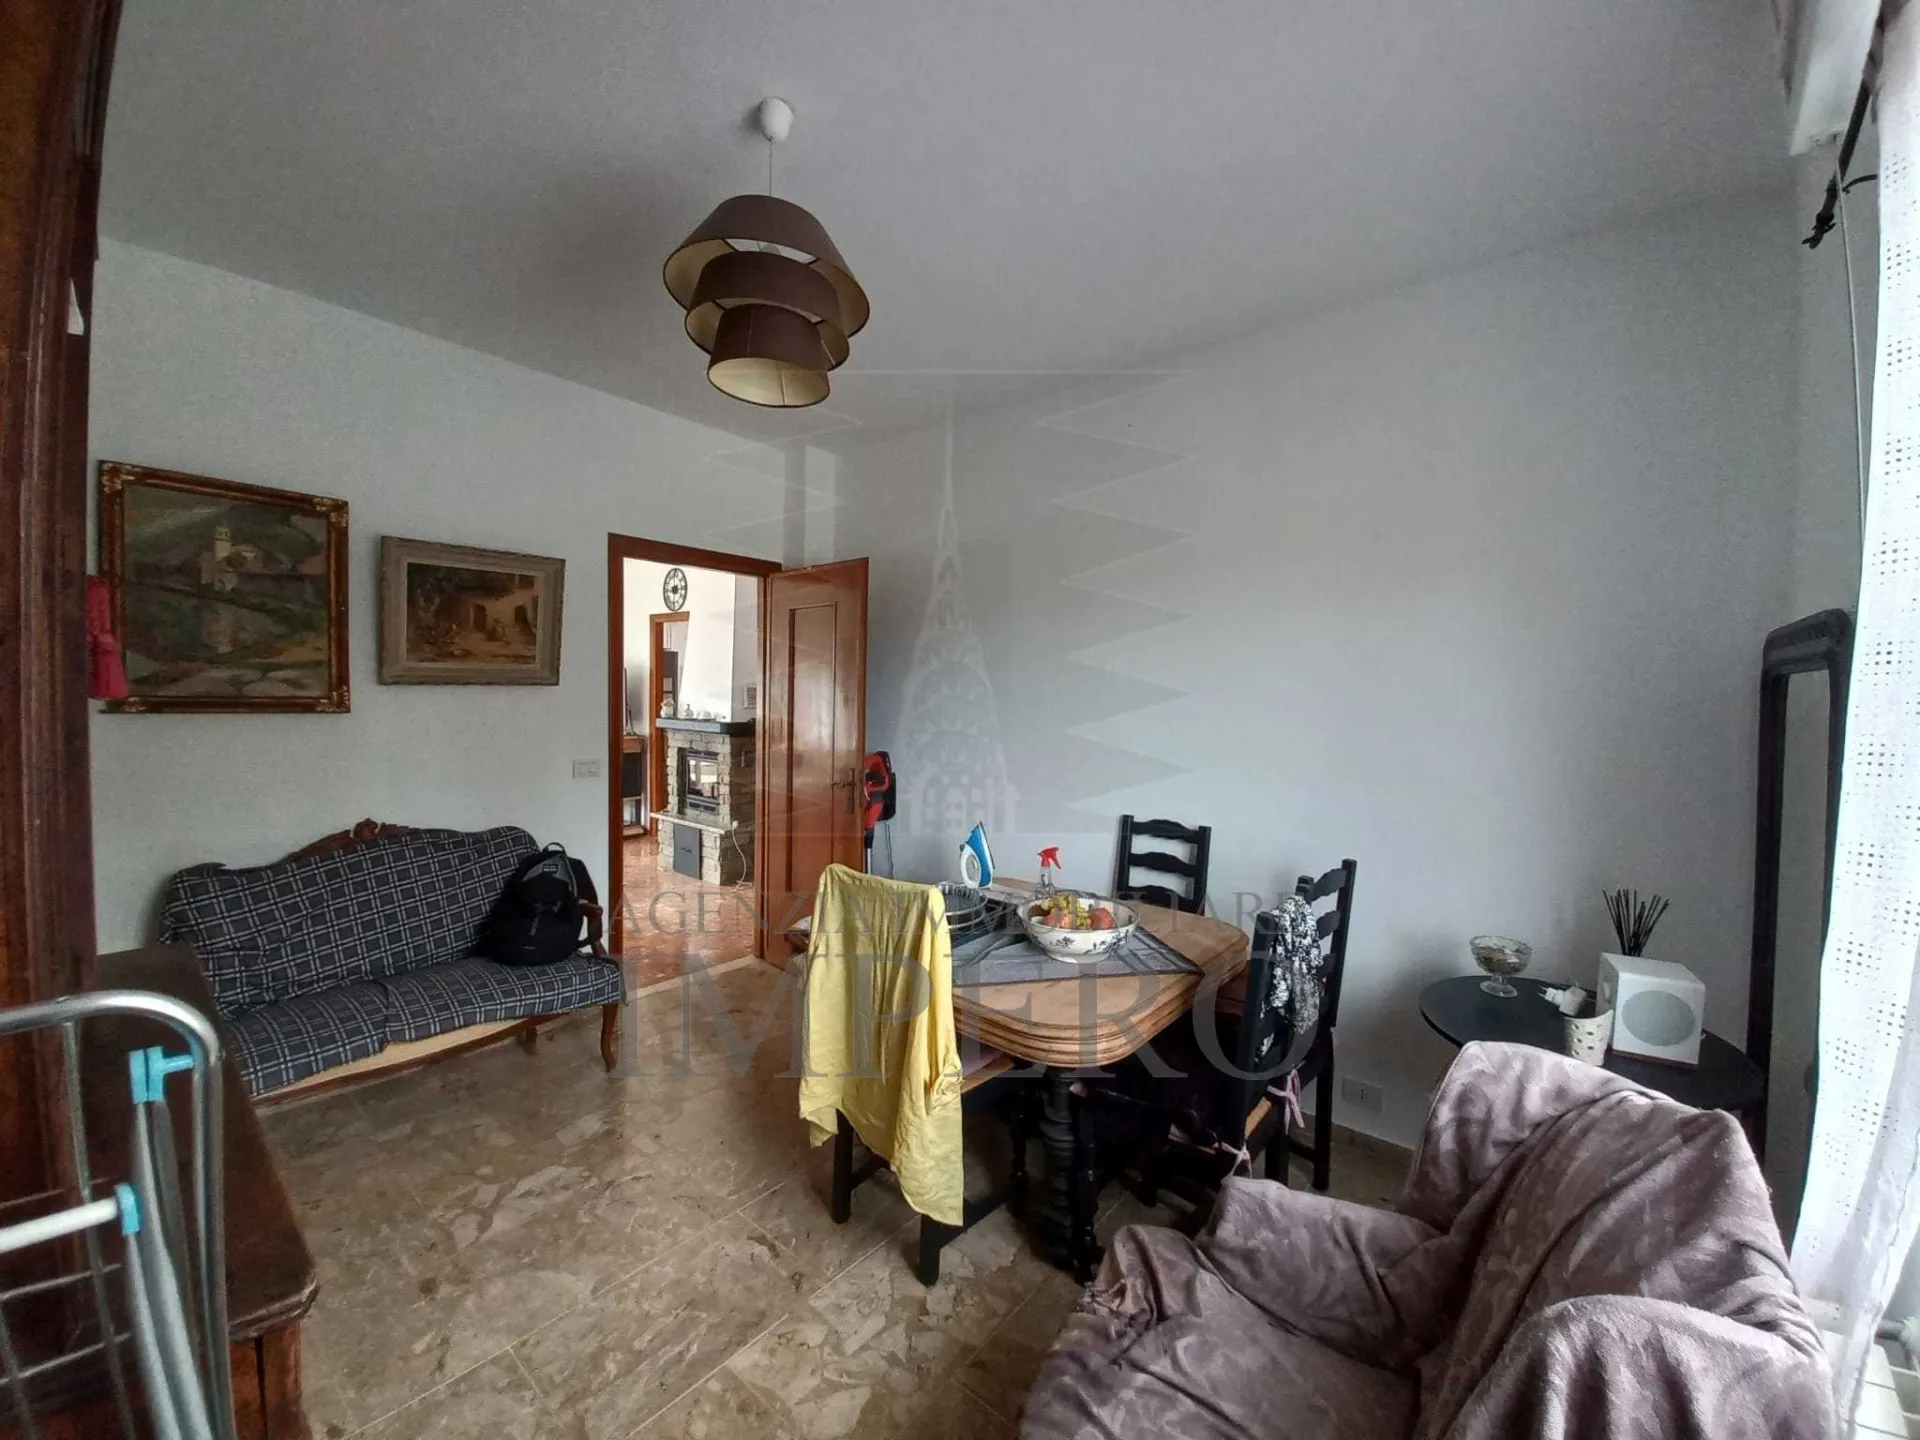 Immagine per Porzione di casa in vendita a Ventimiglia via Garian 4